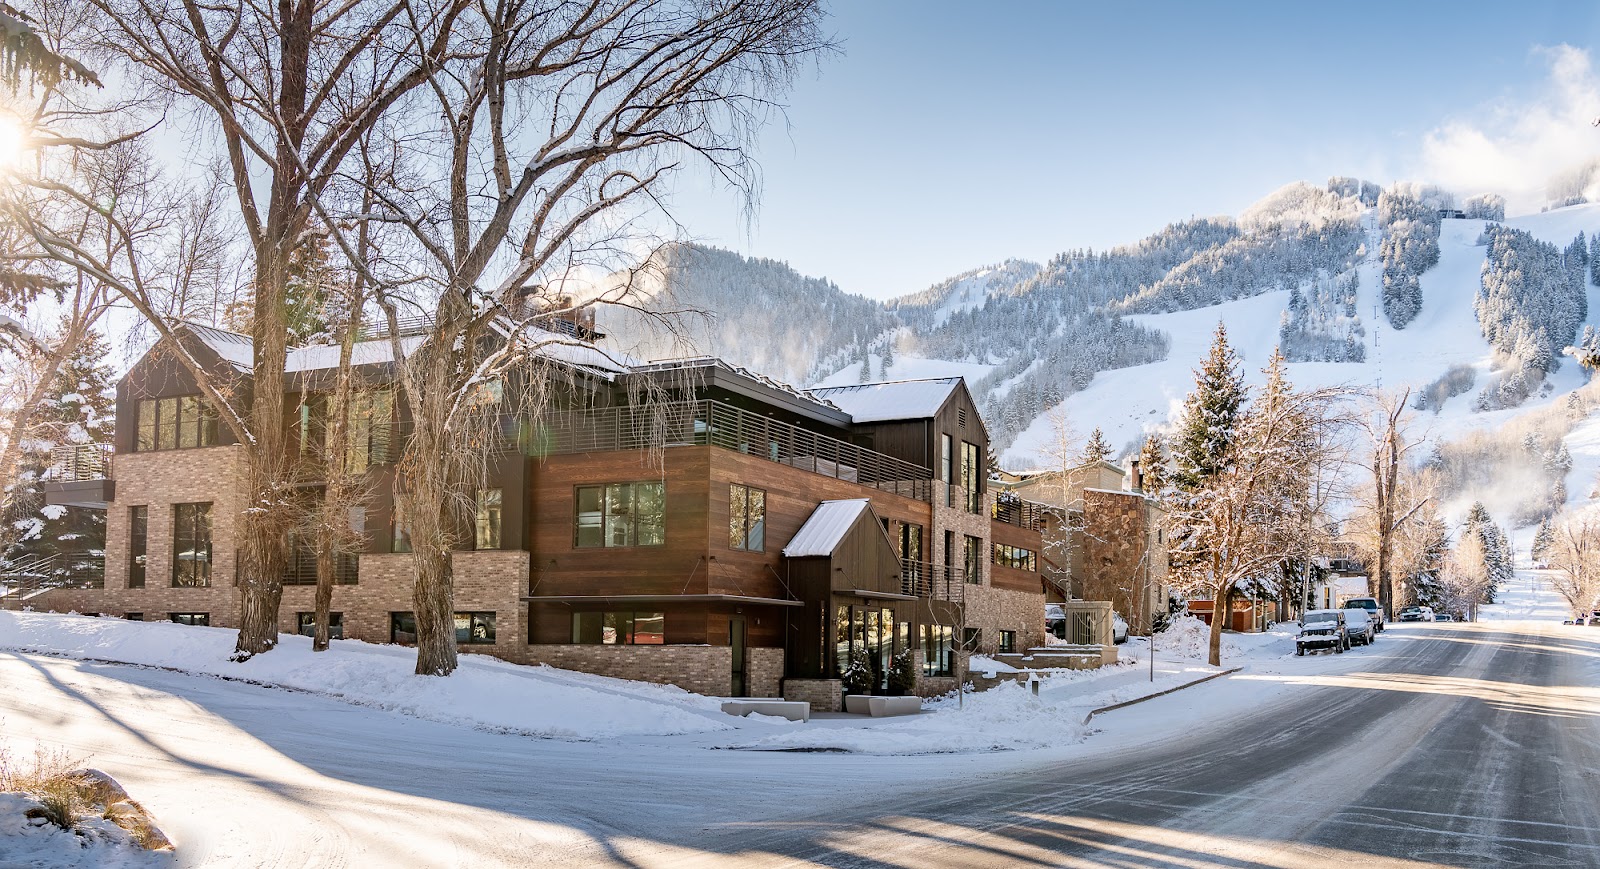 Aspen Street Lodge: A Luxurious Haven in the Heart of Aspen’s Charm